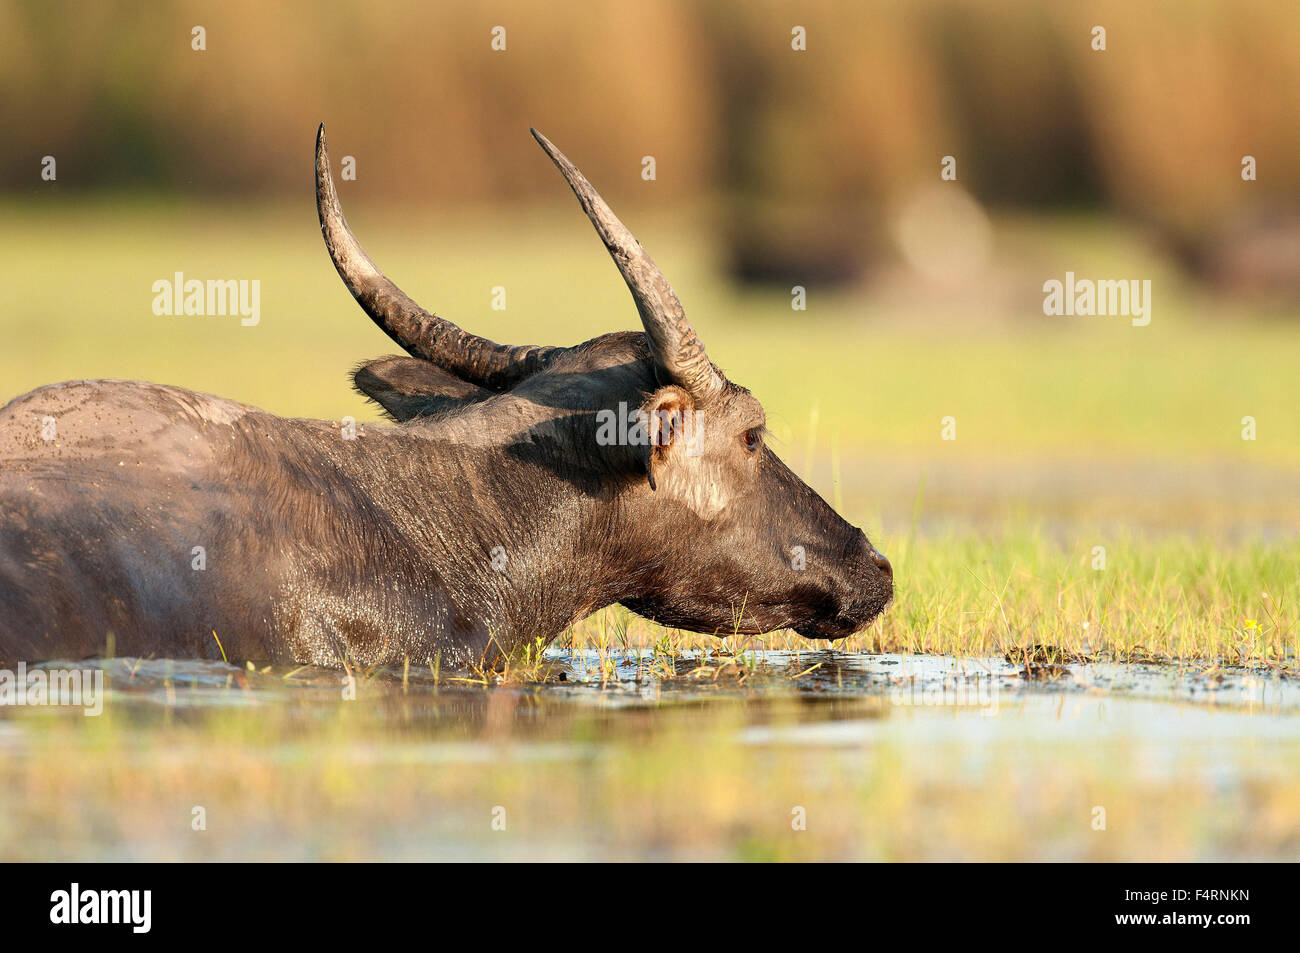 Water Buffalo, animal, Thailand, Asia, mammal, bubalus bubalis, portrait Stock Photo